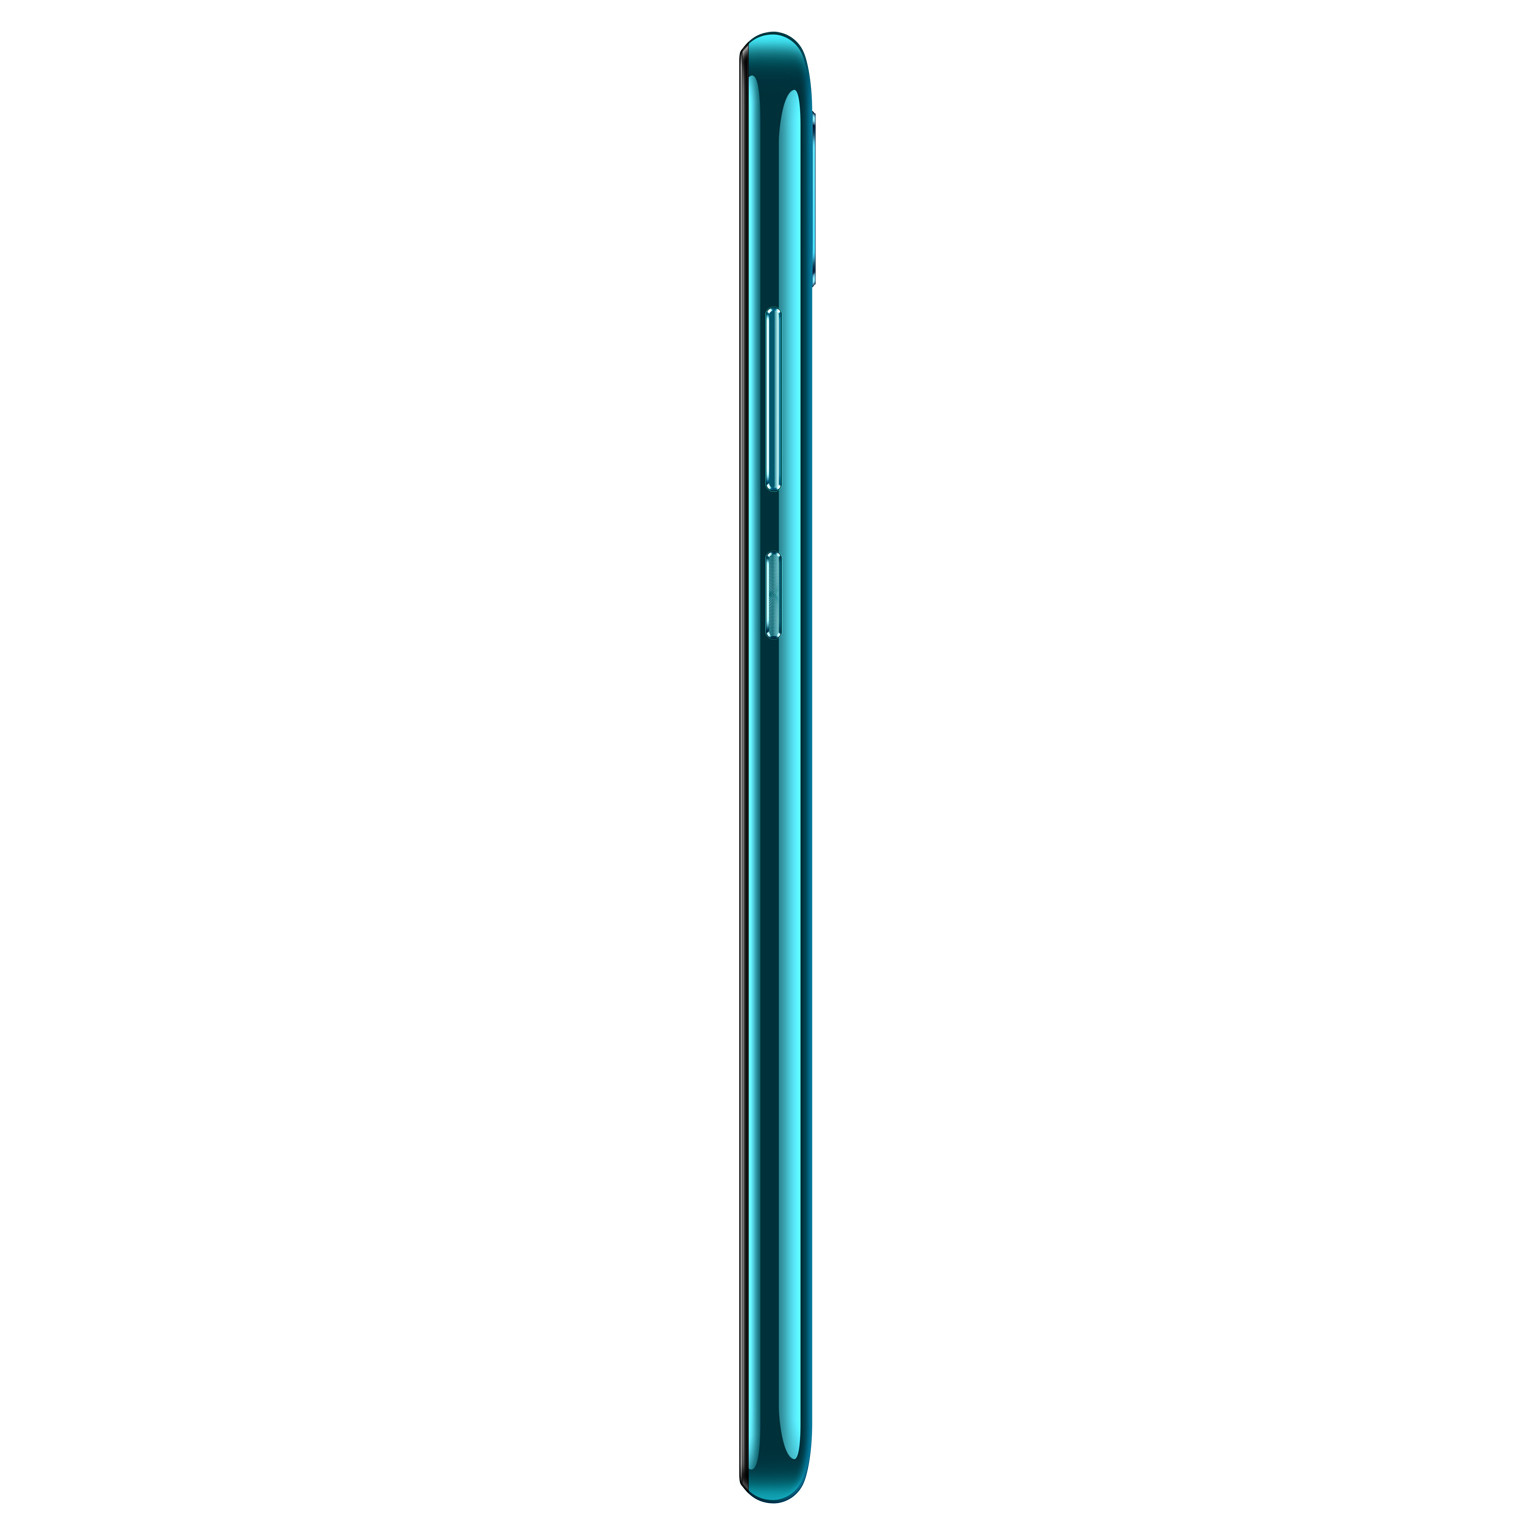 Huawei P Smart 2019 3/64Gb DS Sapphire Blue (51093GVY) (UA UCRF)